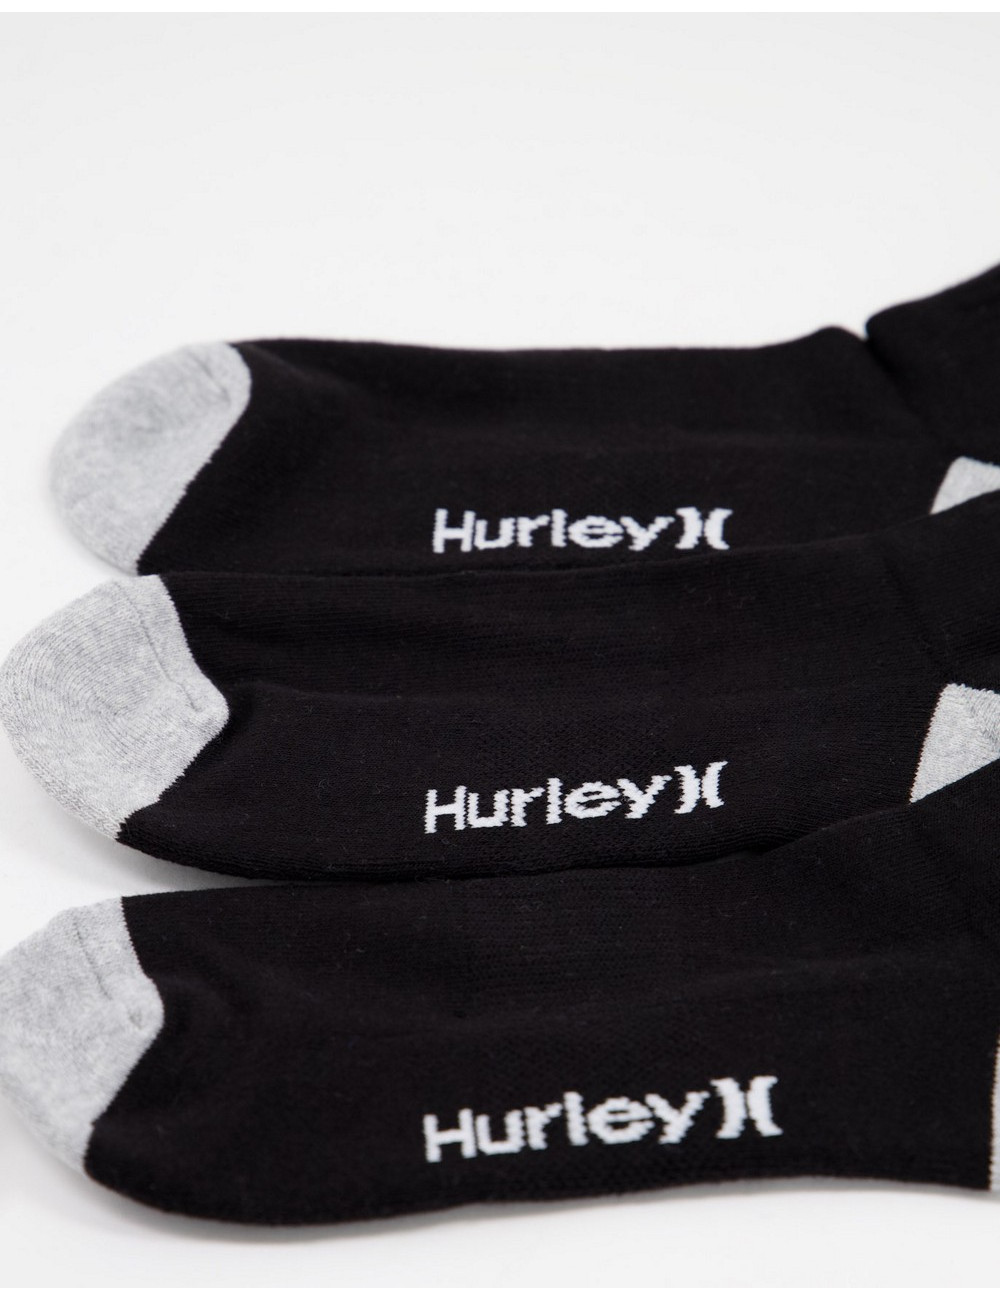 Hurley Terry 3 pack socks...